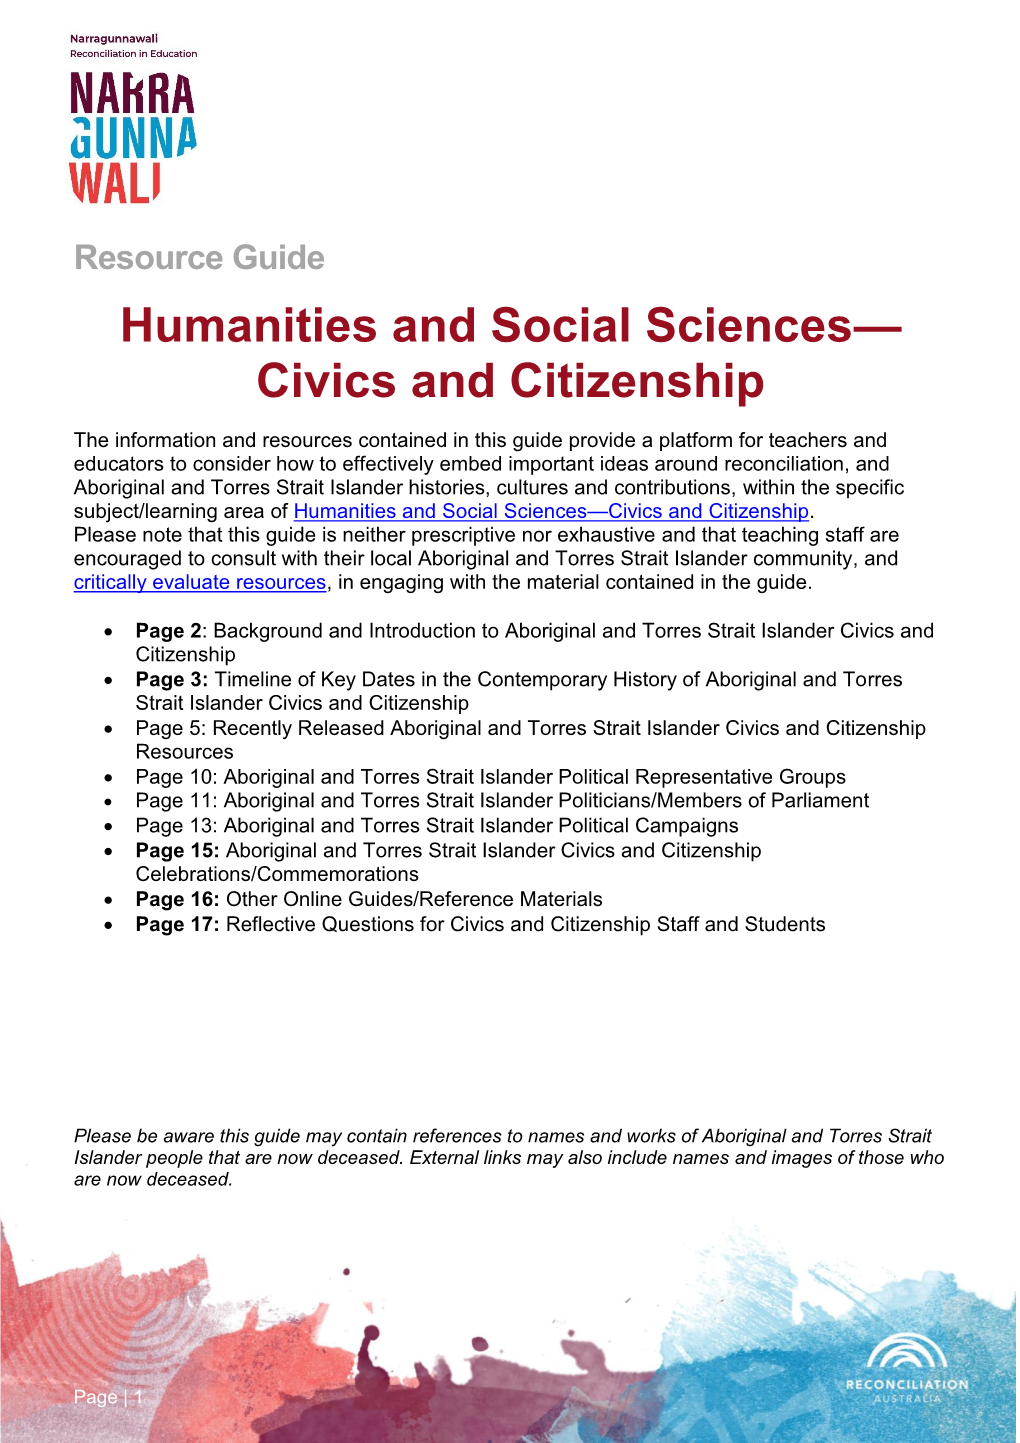 Civics and Citizenship